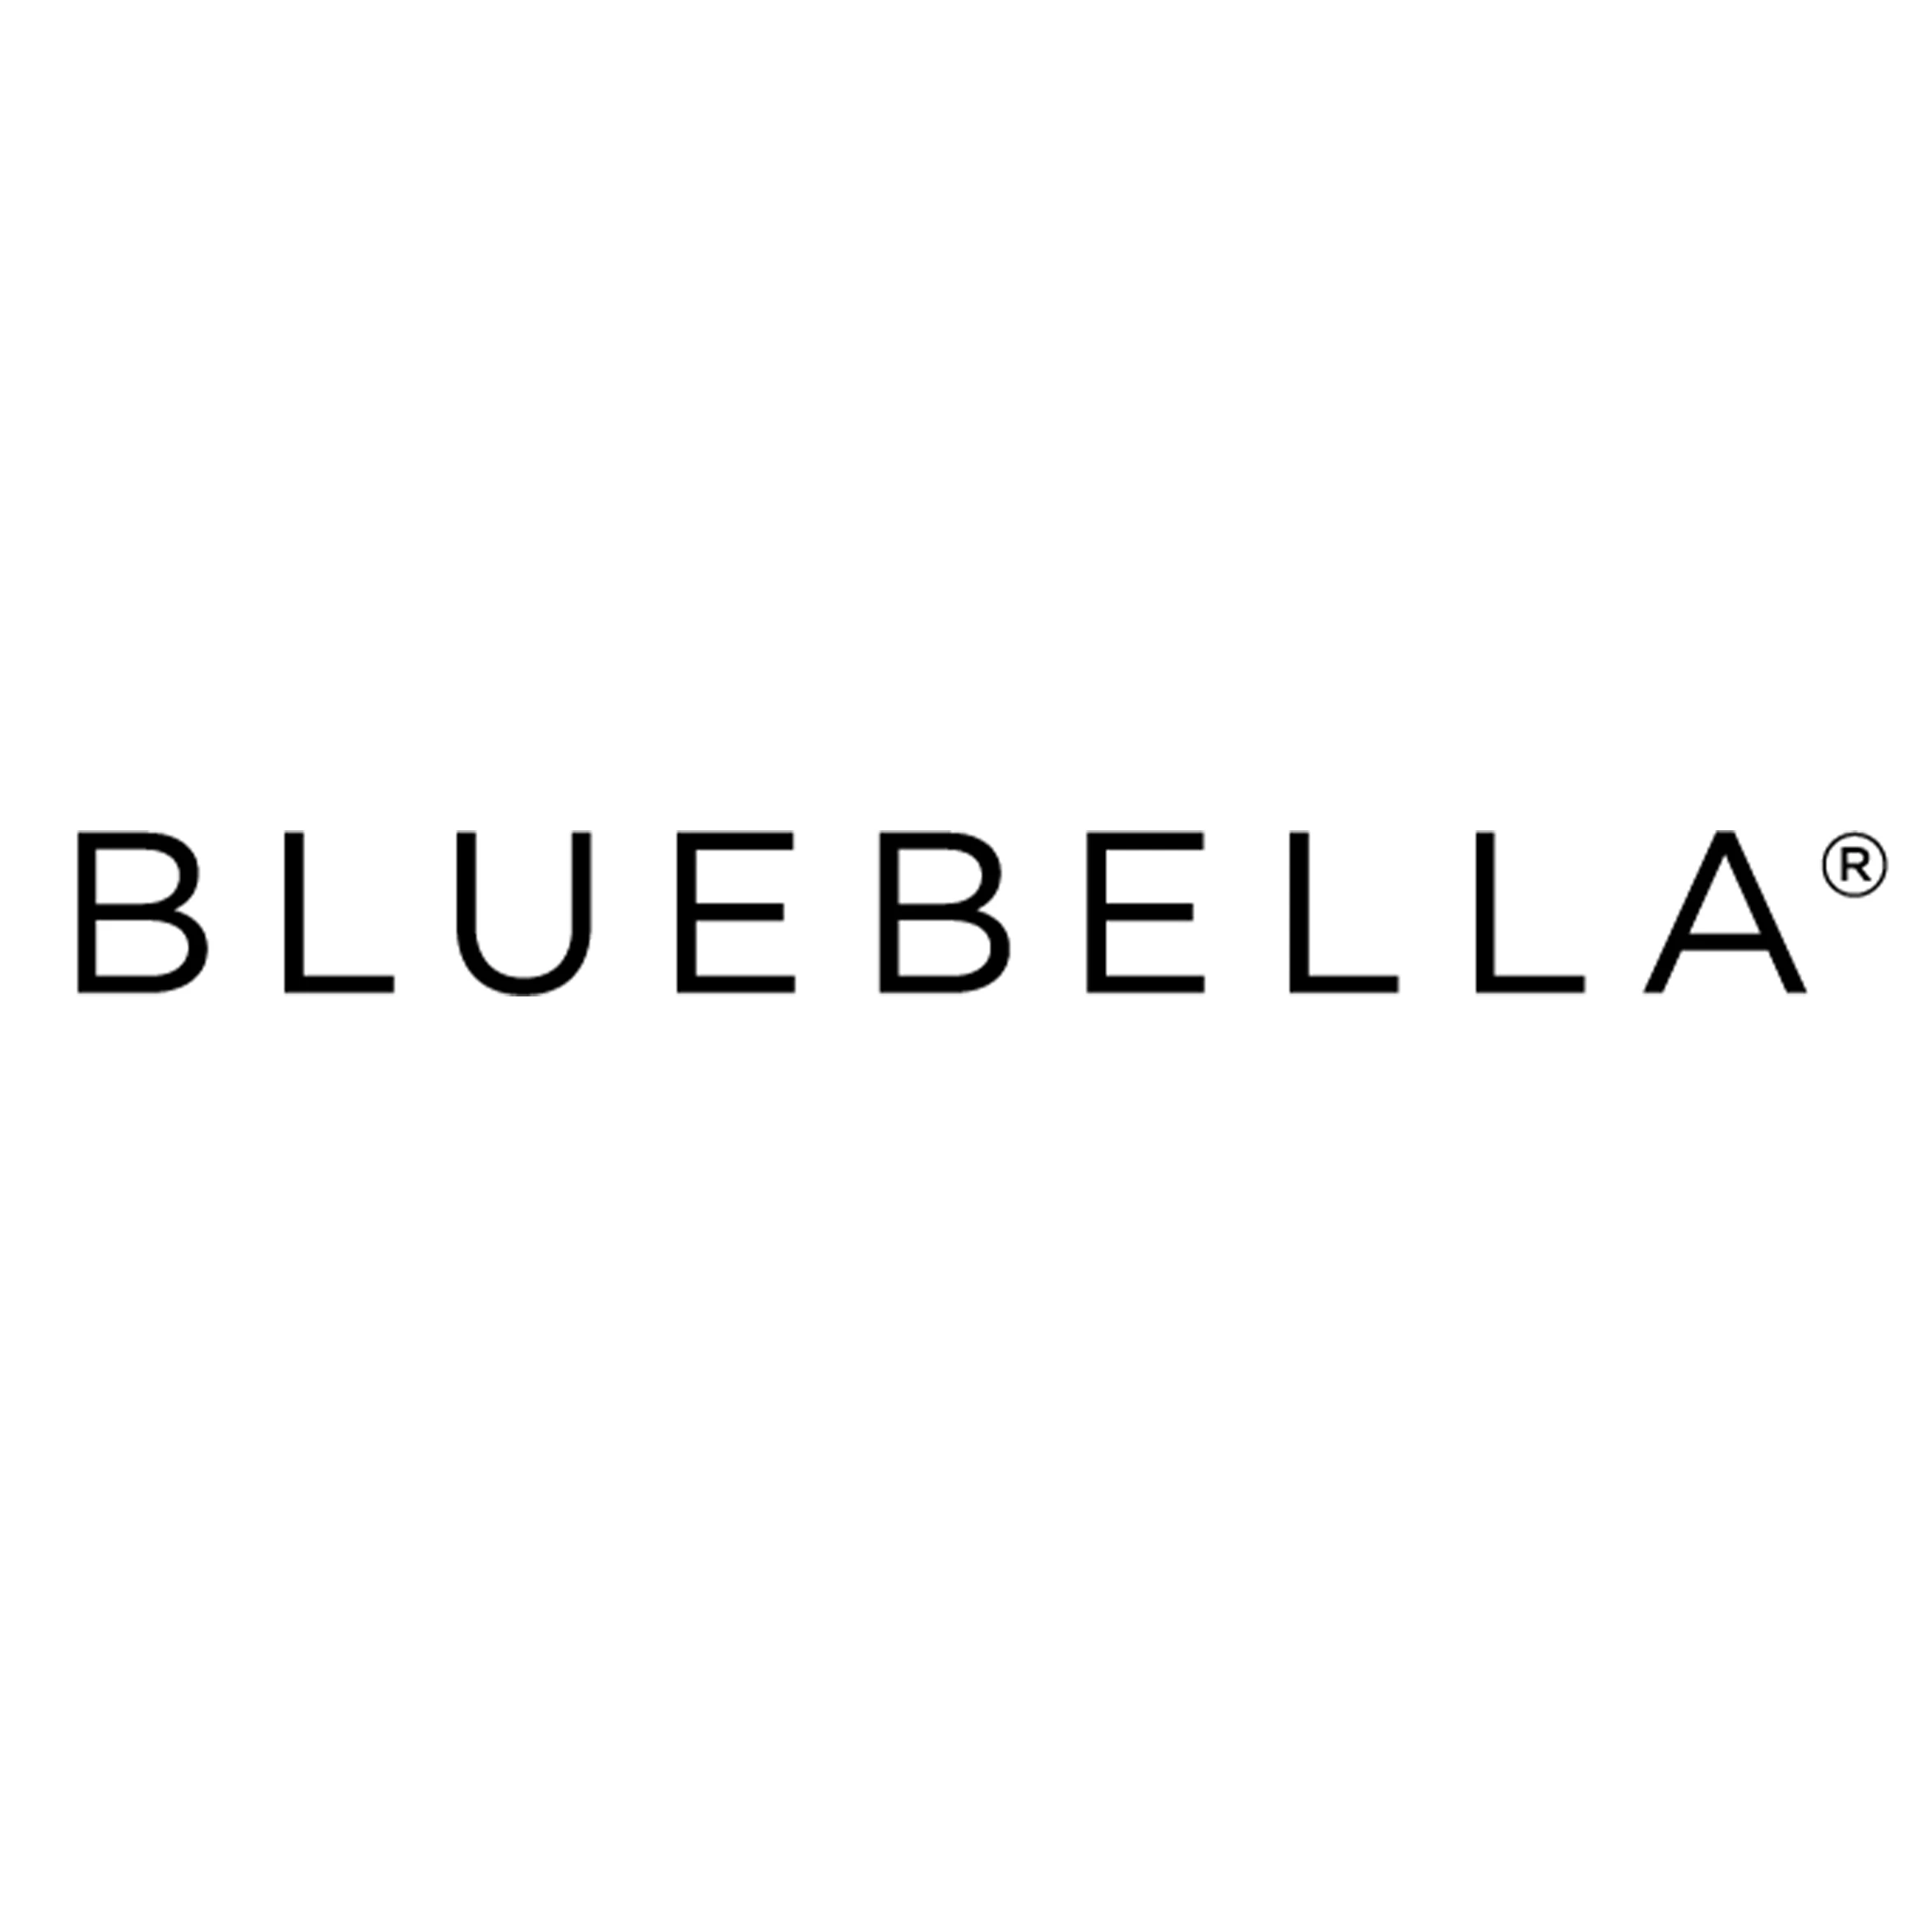 Bluebella brand logo